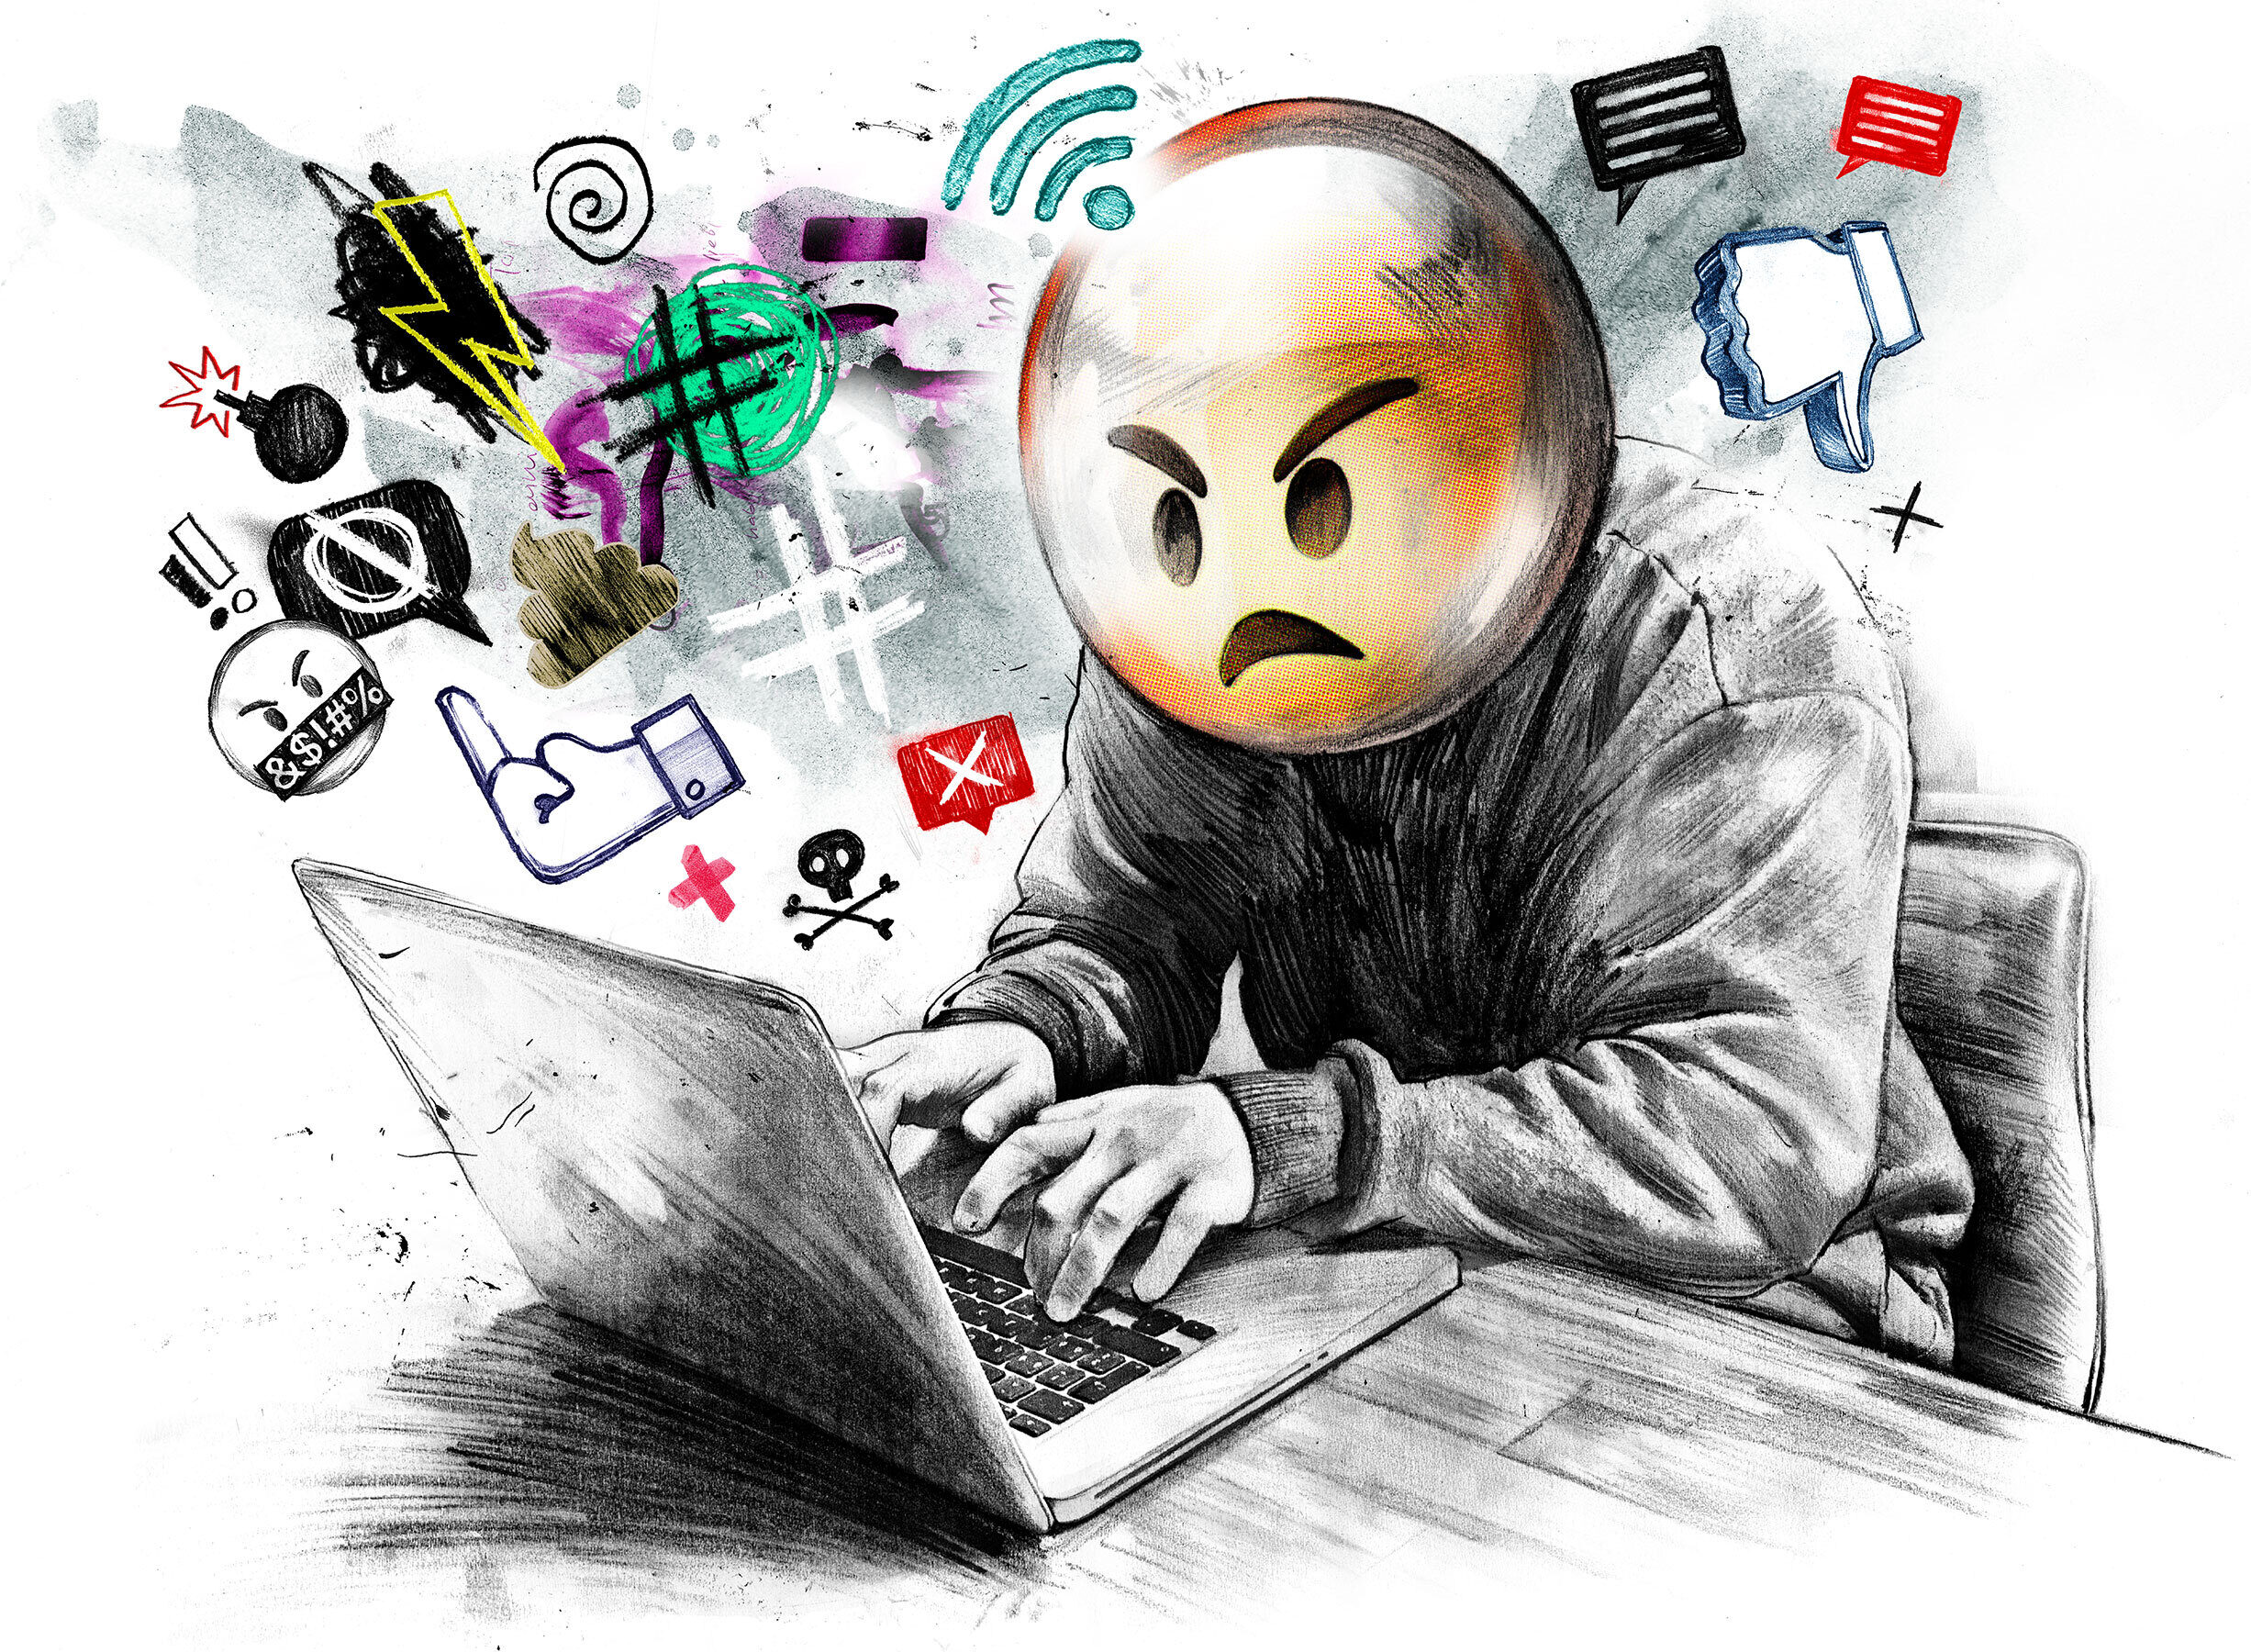 Troll hate web shitstorm editorial illustration - Kornel Illustration | Kornel Stadler portfolio